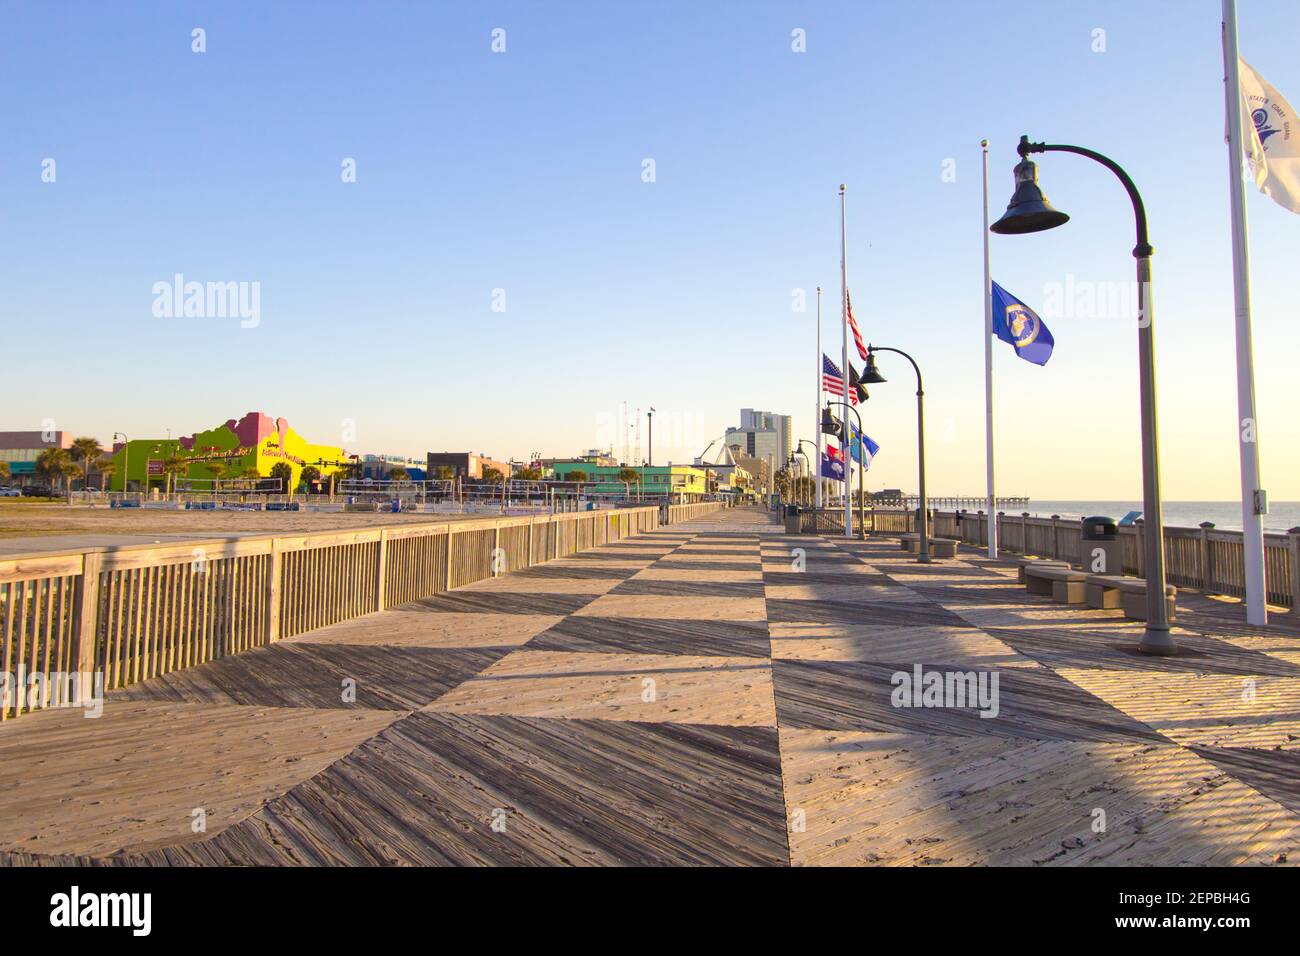 Myrtle Beach, South Carolina, USA - 25. Februar 2021: Avenue of Flags entlang des weltberühmten Myrtle Beach Boardwalk in South Carolina. Stockfoto